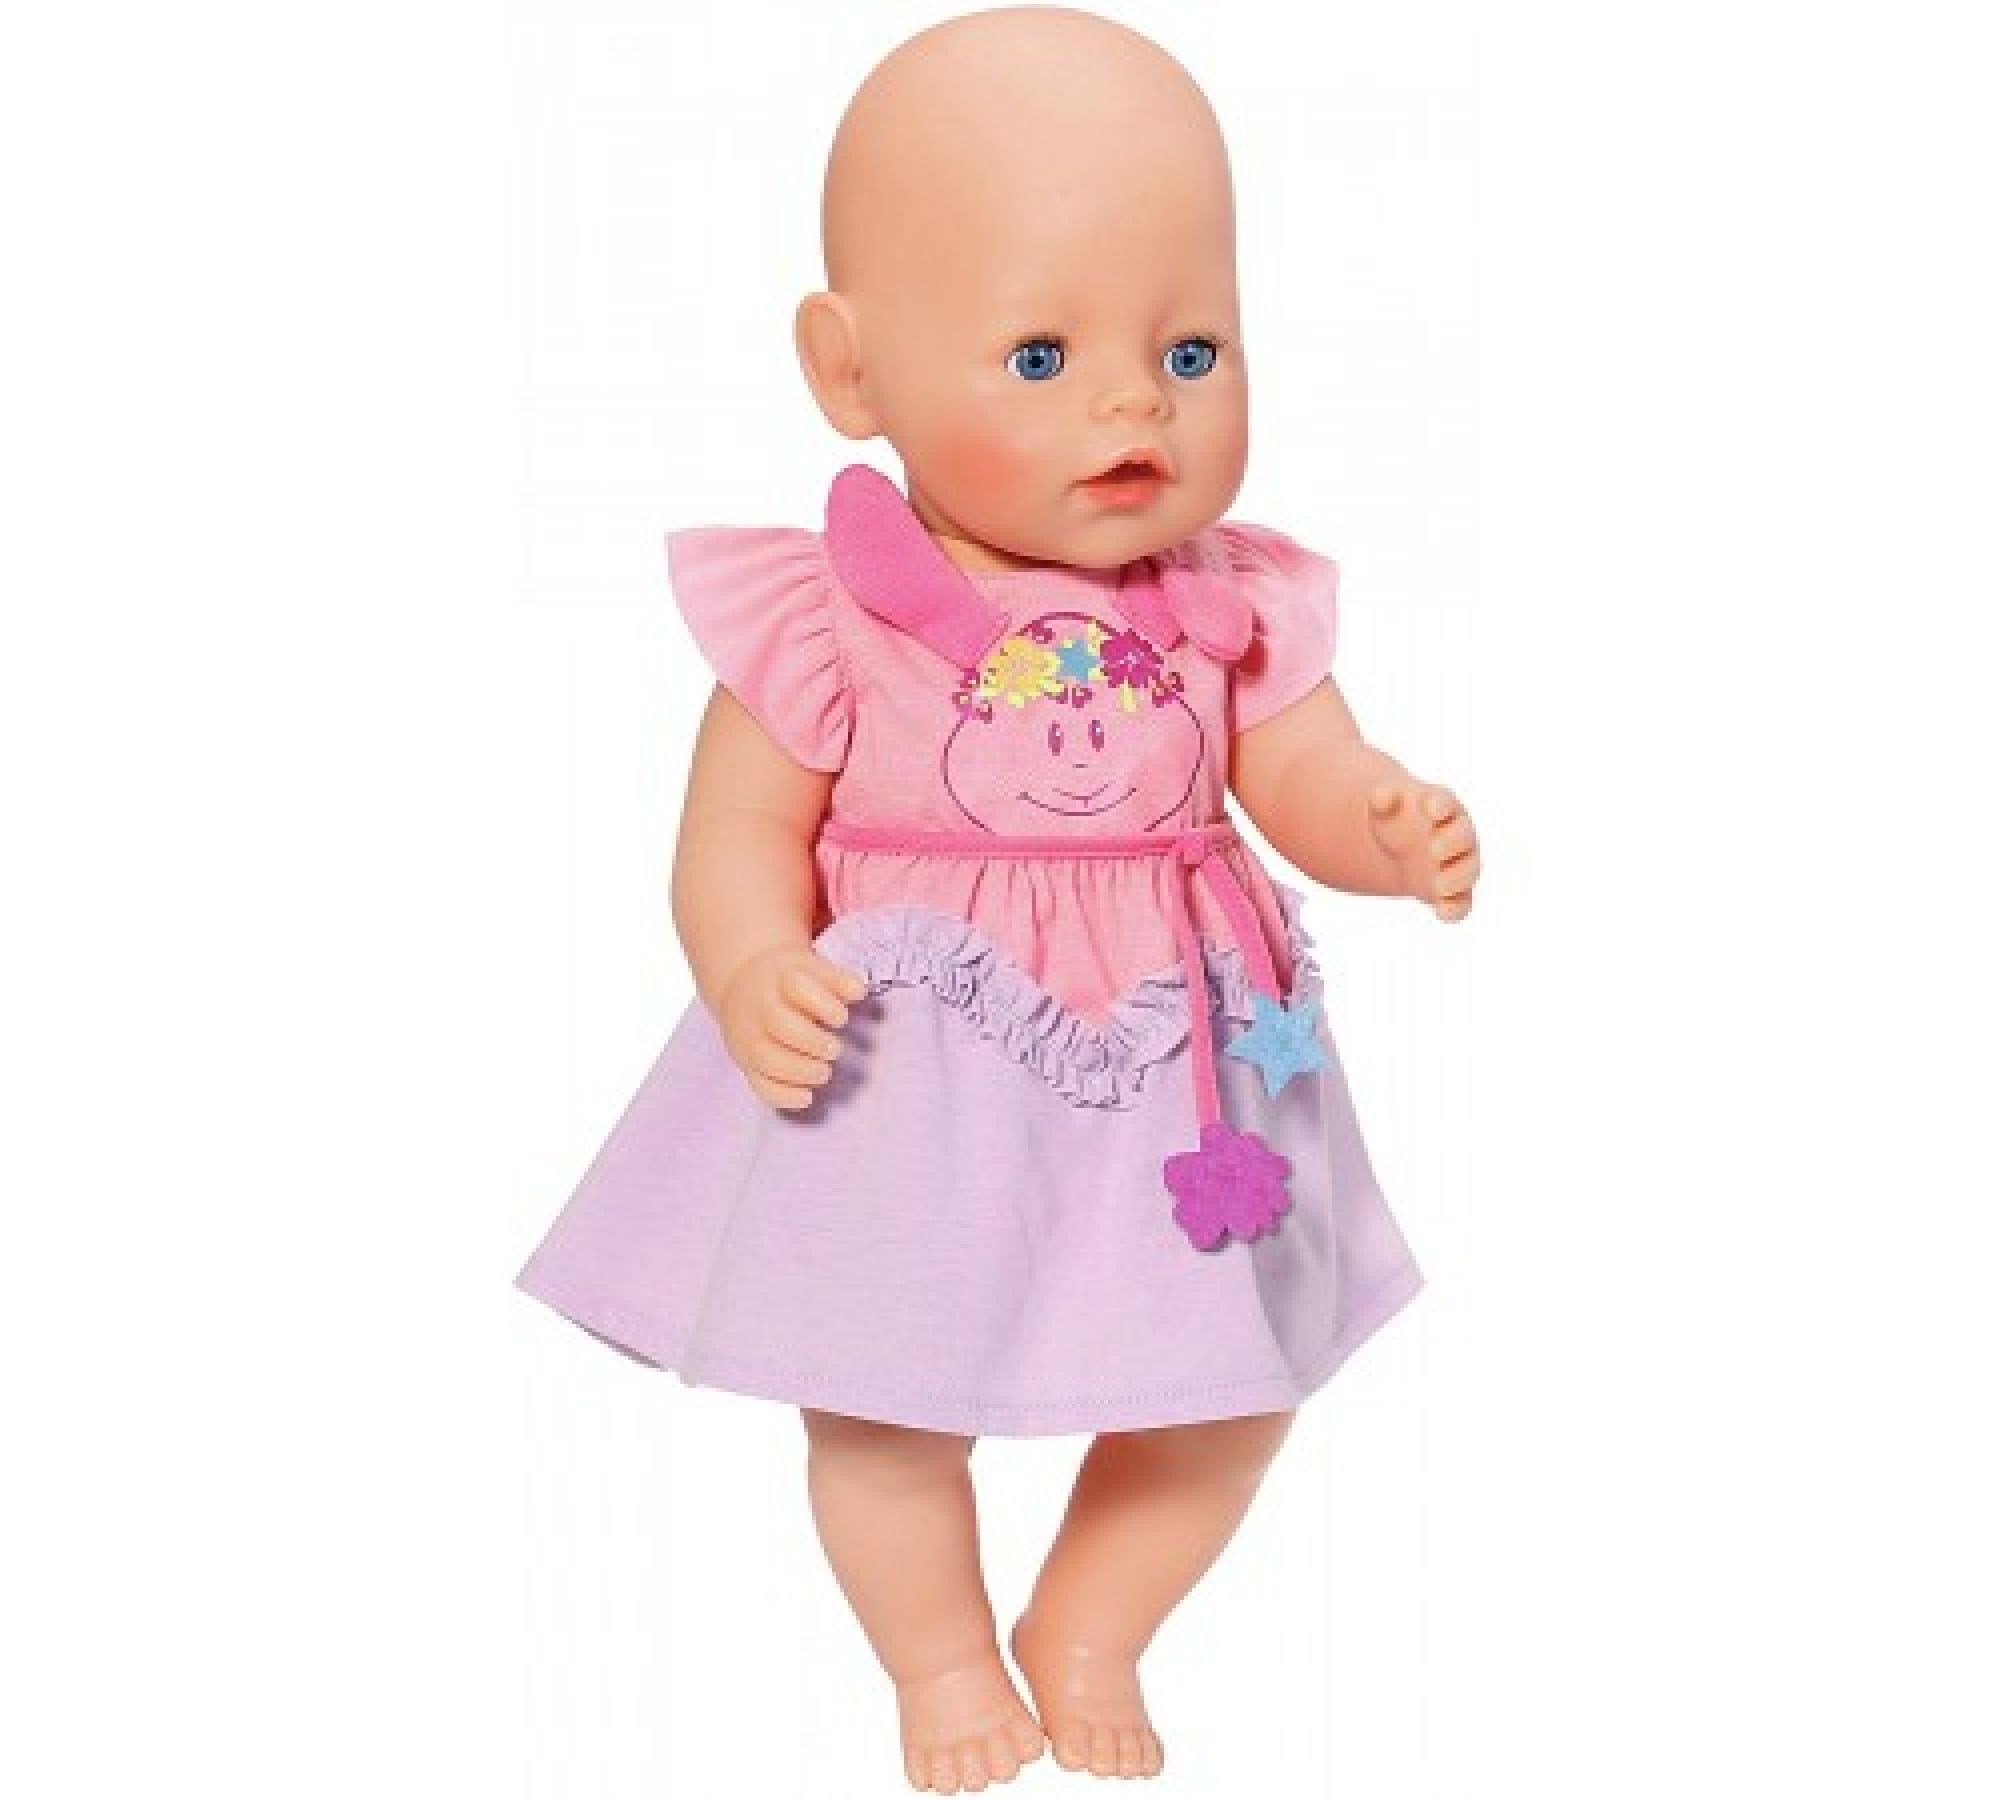 Куколка беби. Кукла Беби Борн. Zapf Creation одежда для куклы Baby born 824559.